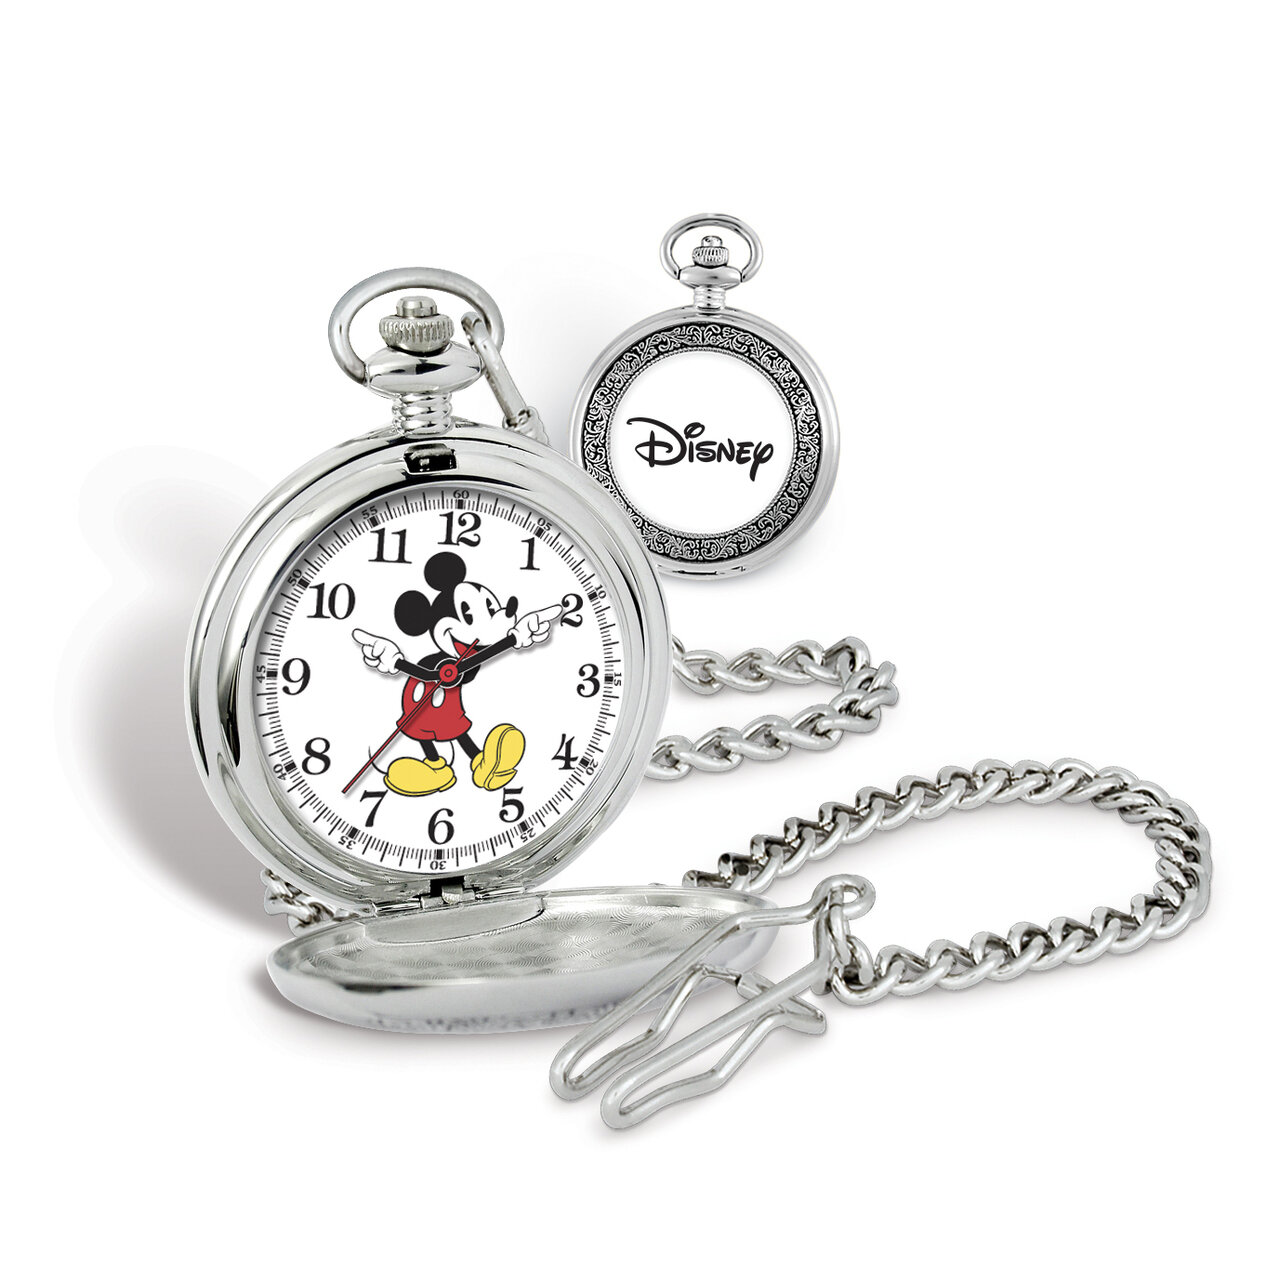 Disney Mickey Mouse Pocket Watch with Chain XWA5723